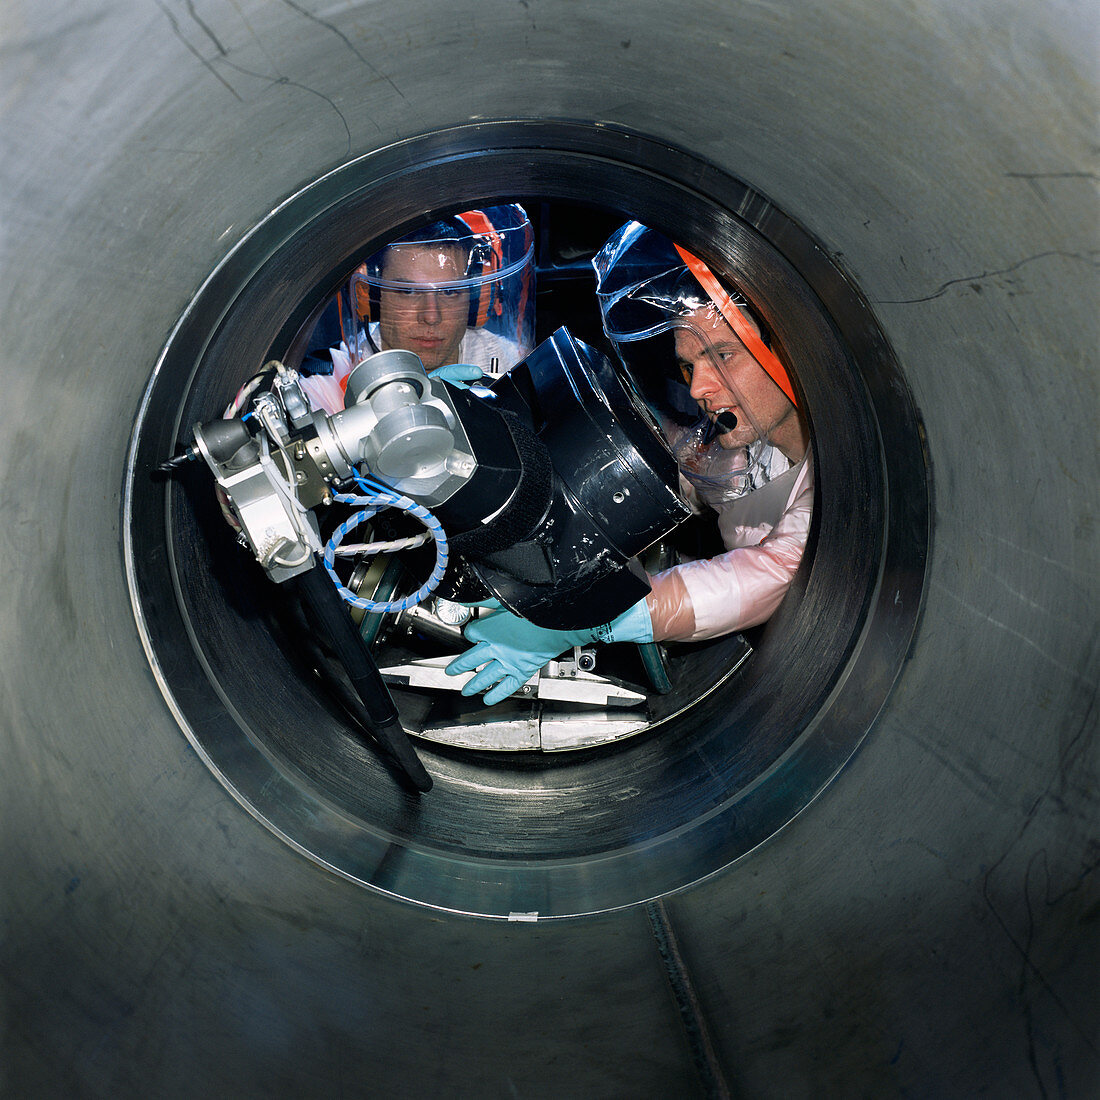 Nuclear technicians installing a robot